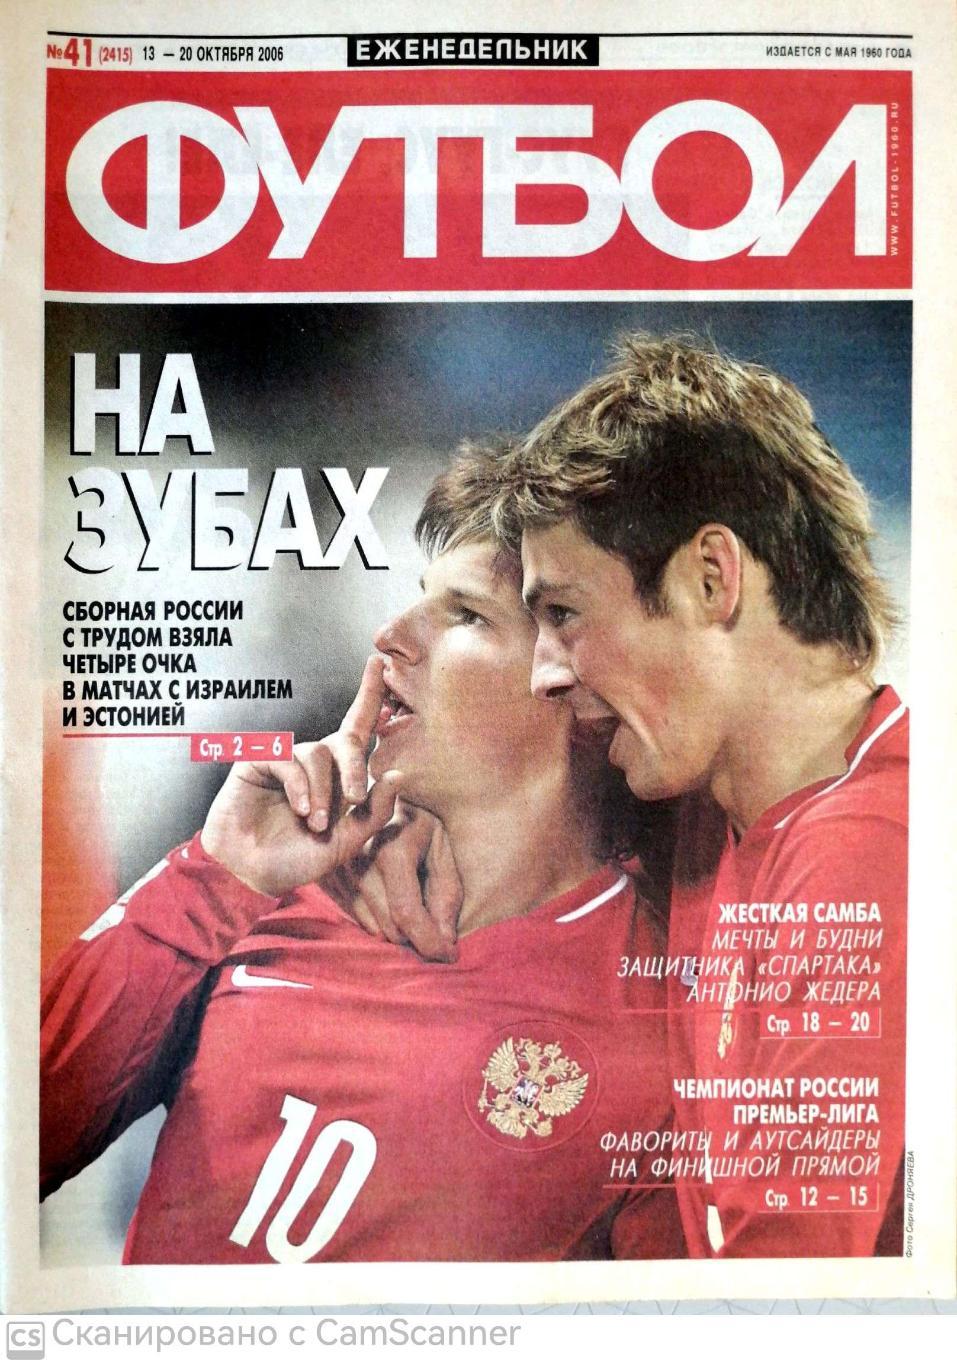 Еженедельник «Футбол» (Москва). 2006 год. №41